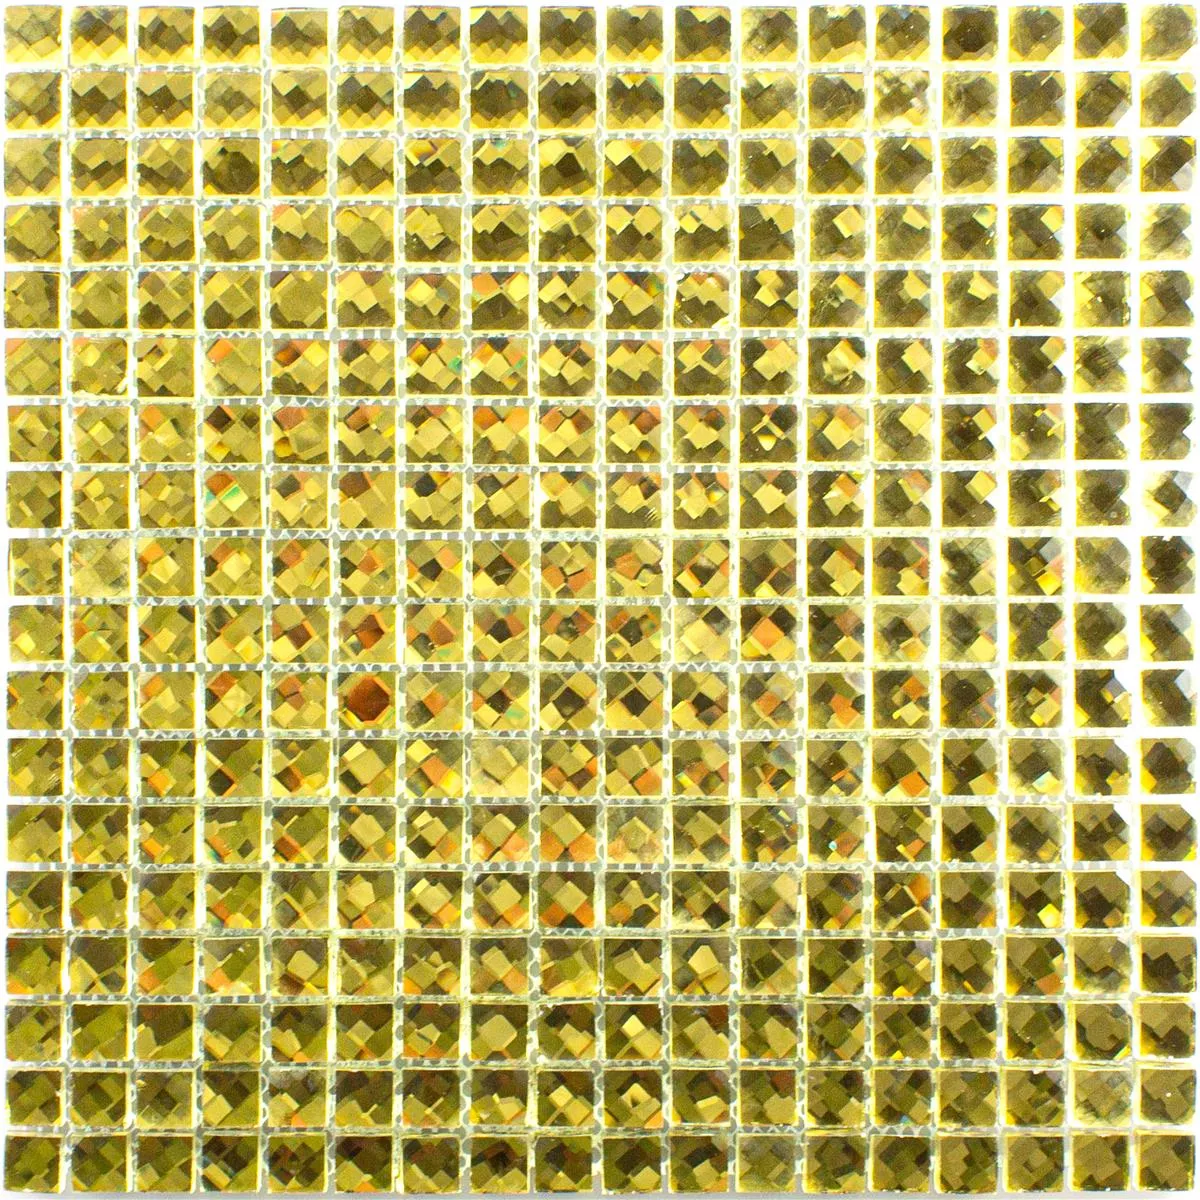 Mønster fra Glass Mosaikkfliser Victoria Gull Torget 15